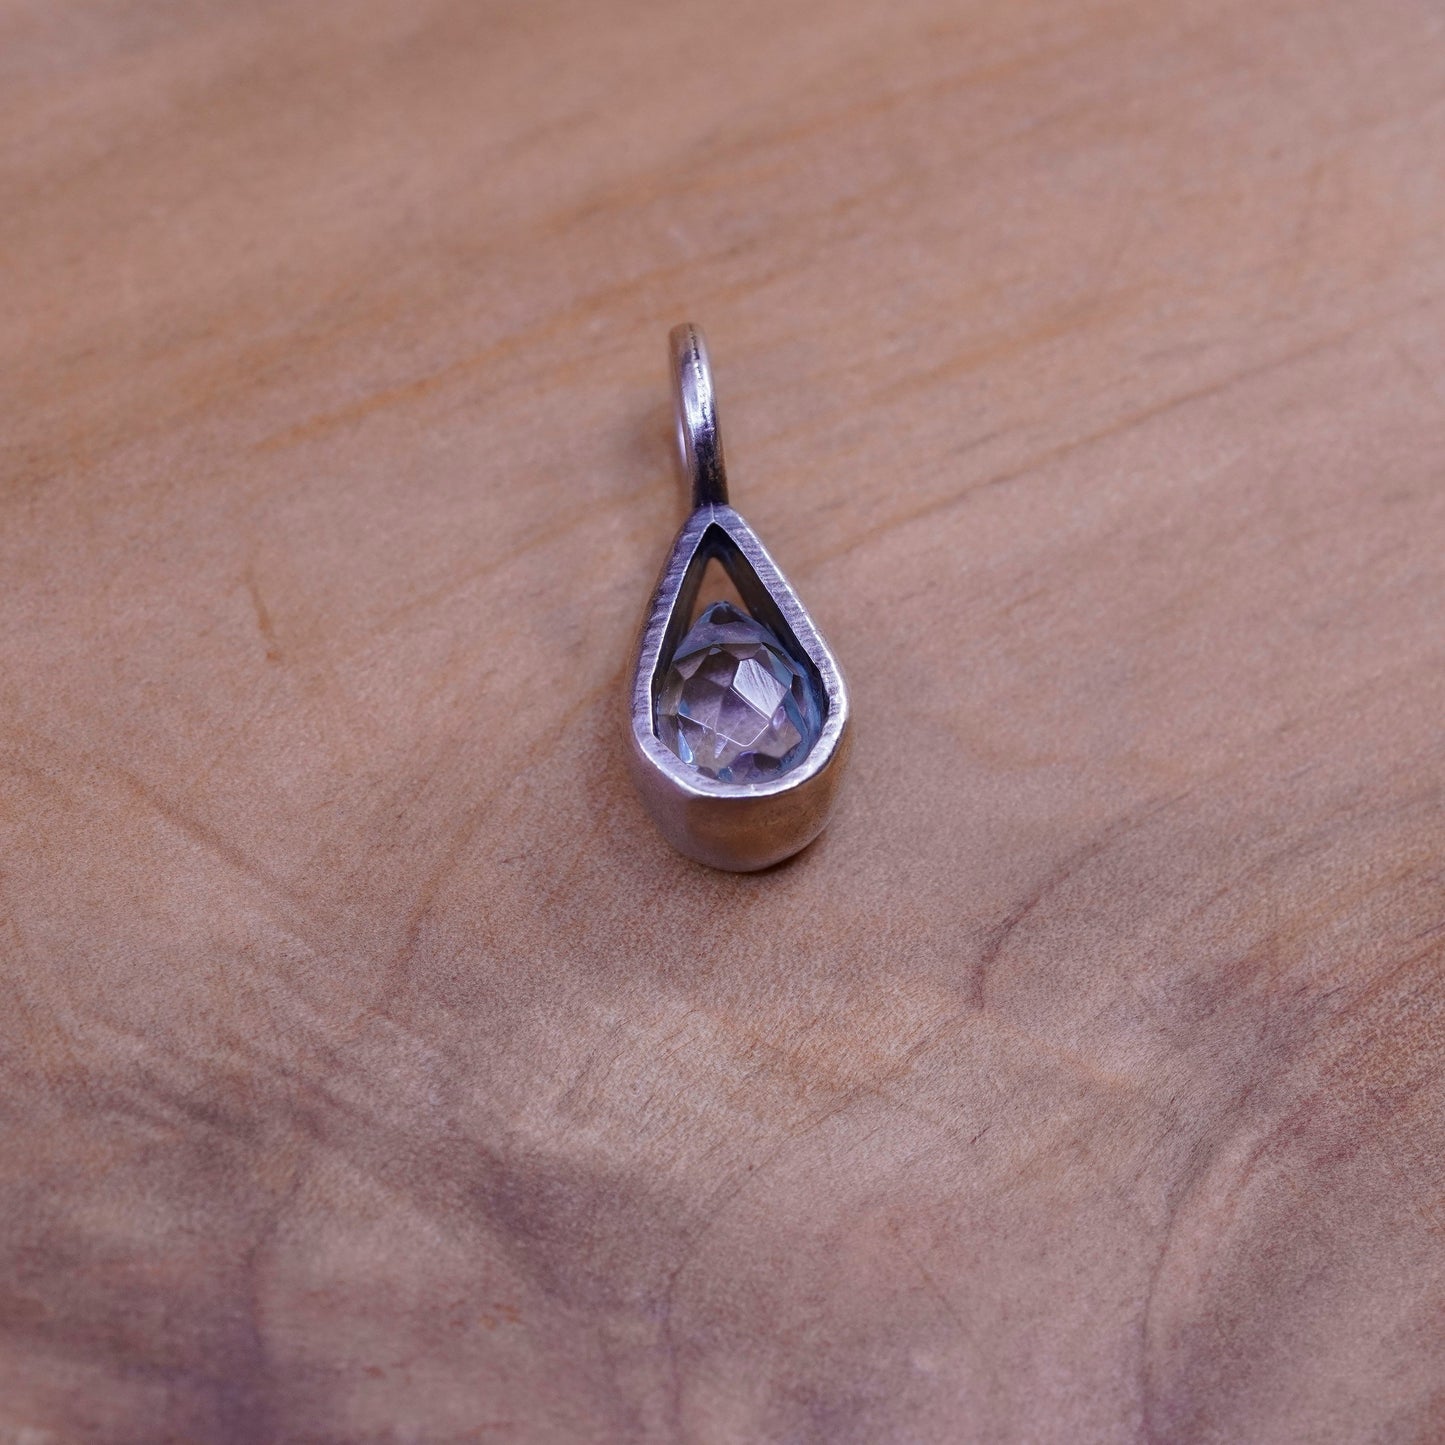 Vintage Sterling silver handmade pendant, 925 charm with teardrop topaz